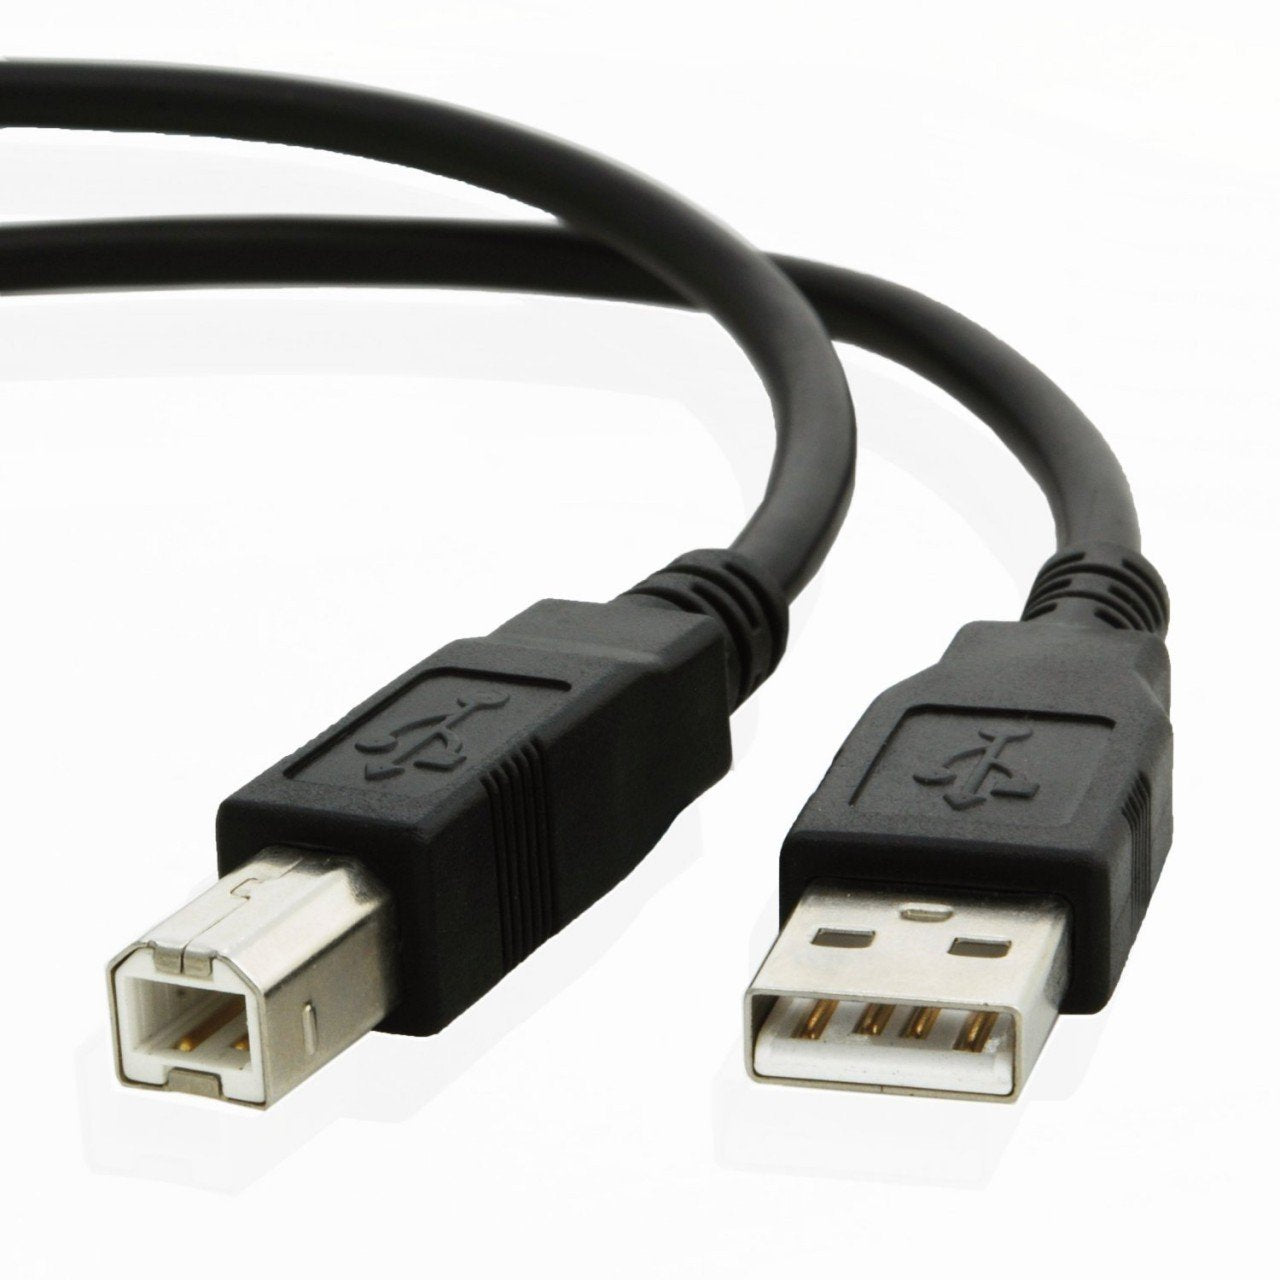 USB cable for Canon PIXMA MX885